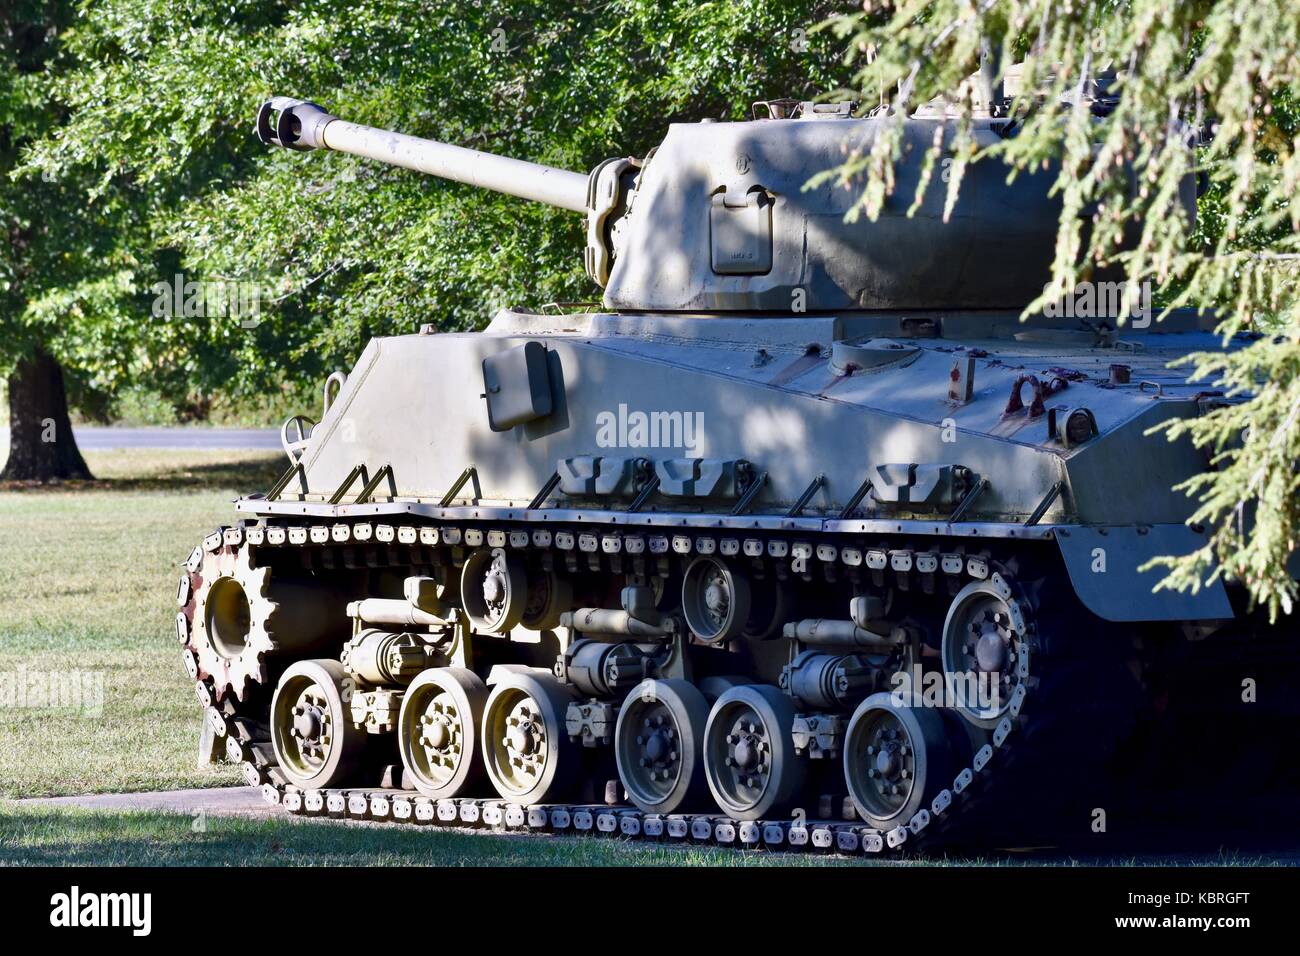 M41 walker bulldog tank -Fotos und -Bildmaterial in hoher Auflösung – Alamy